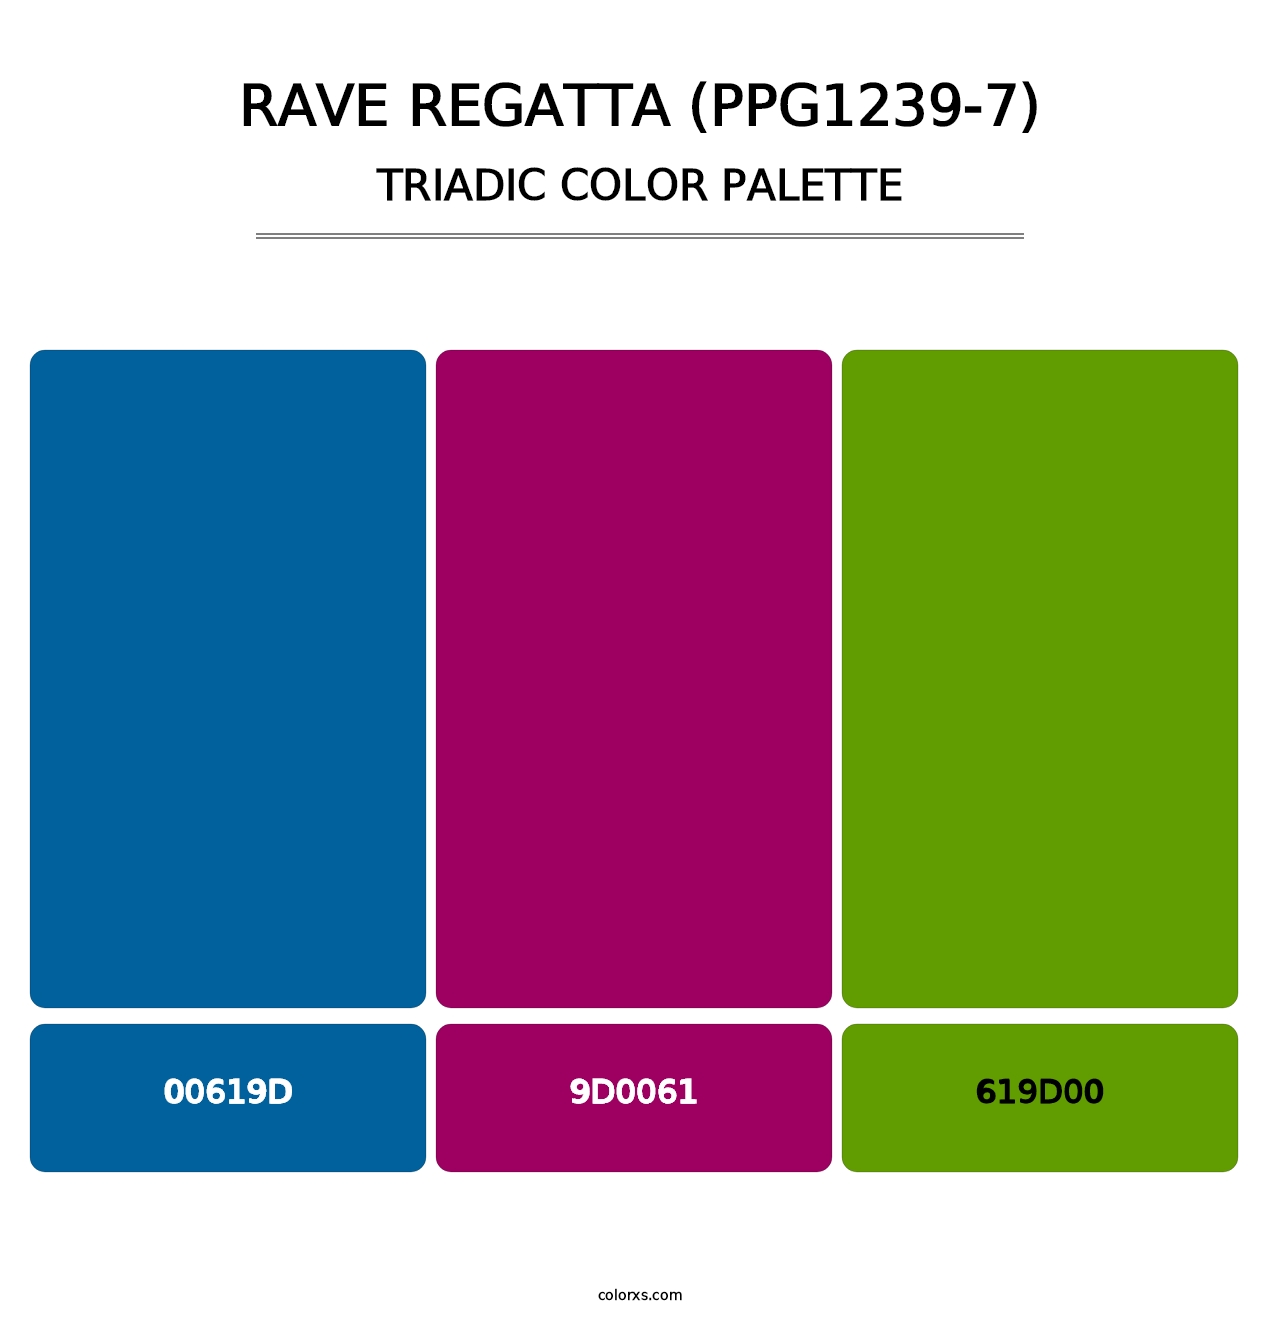 Rave Regatta (PPG1239-7) - Triadic Color Palette